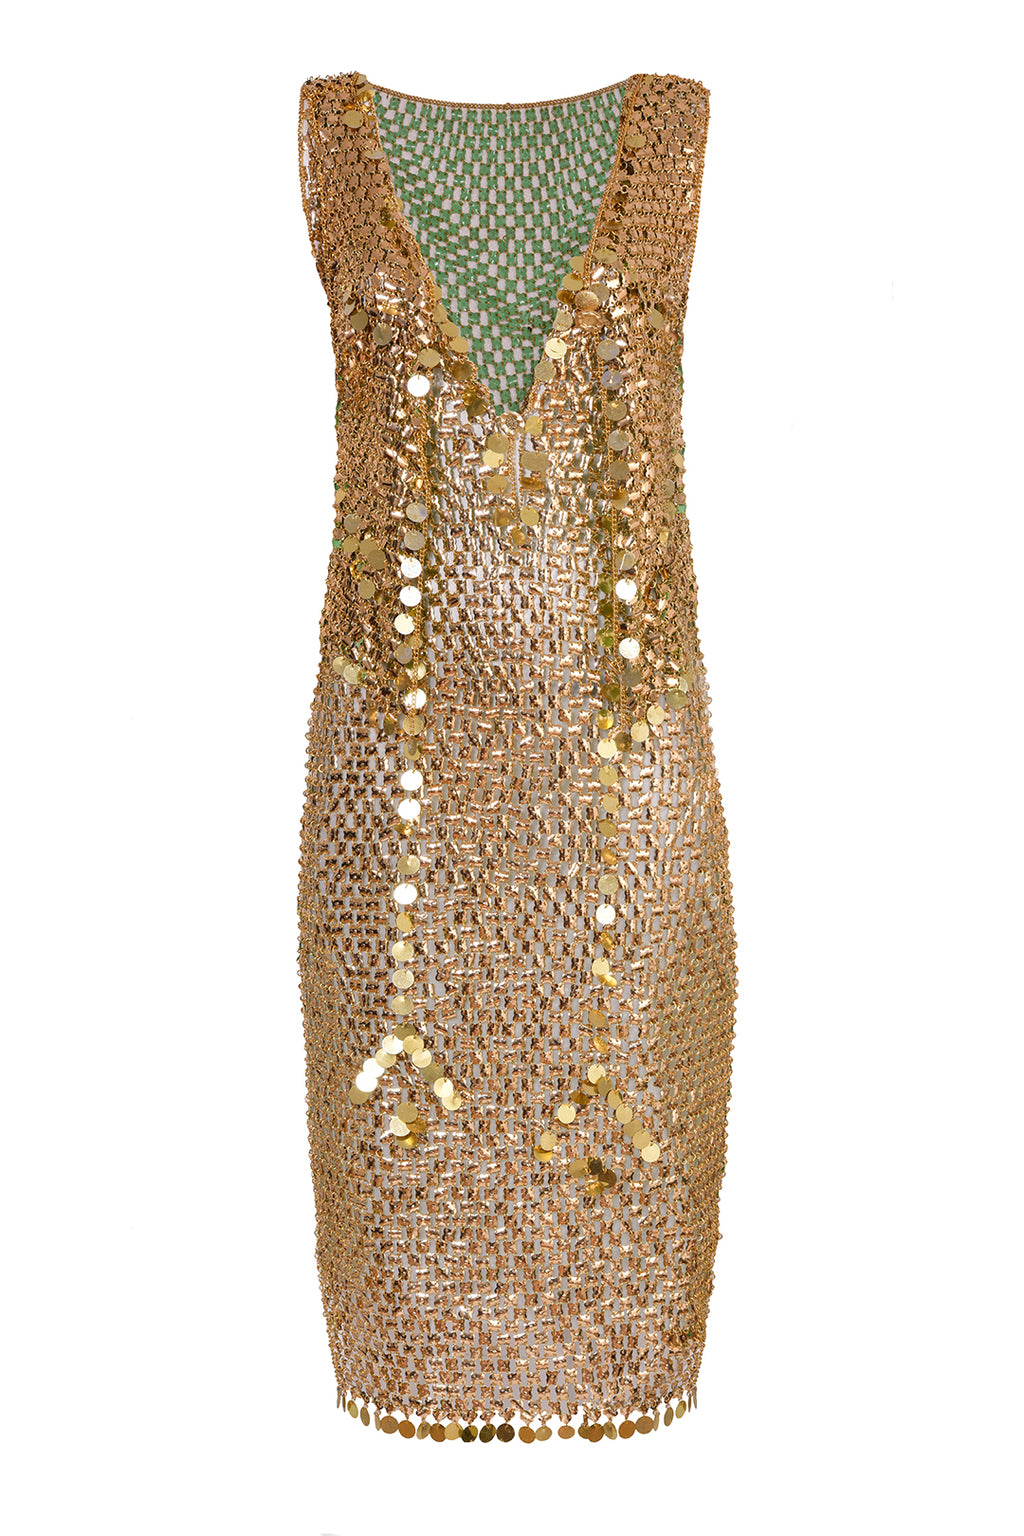 1960's Paco Rabanne Gold Disc Dress